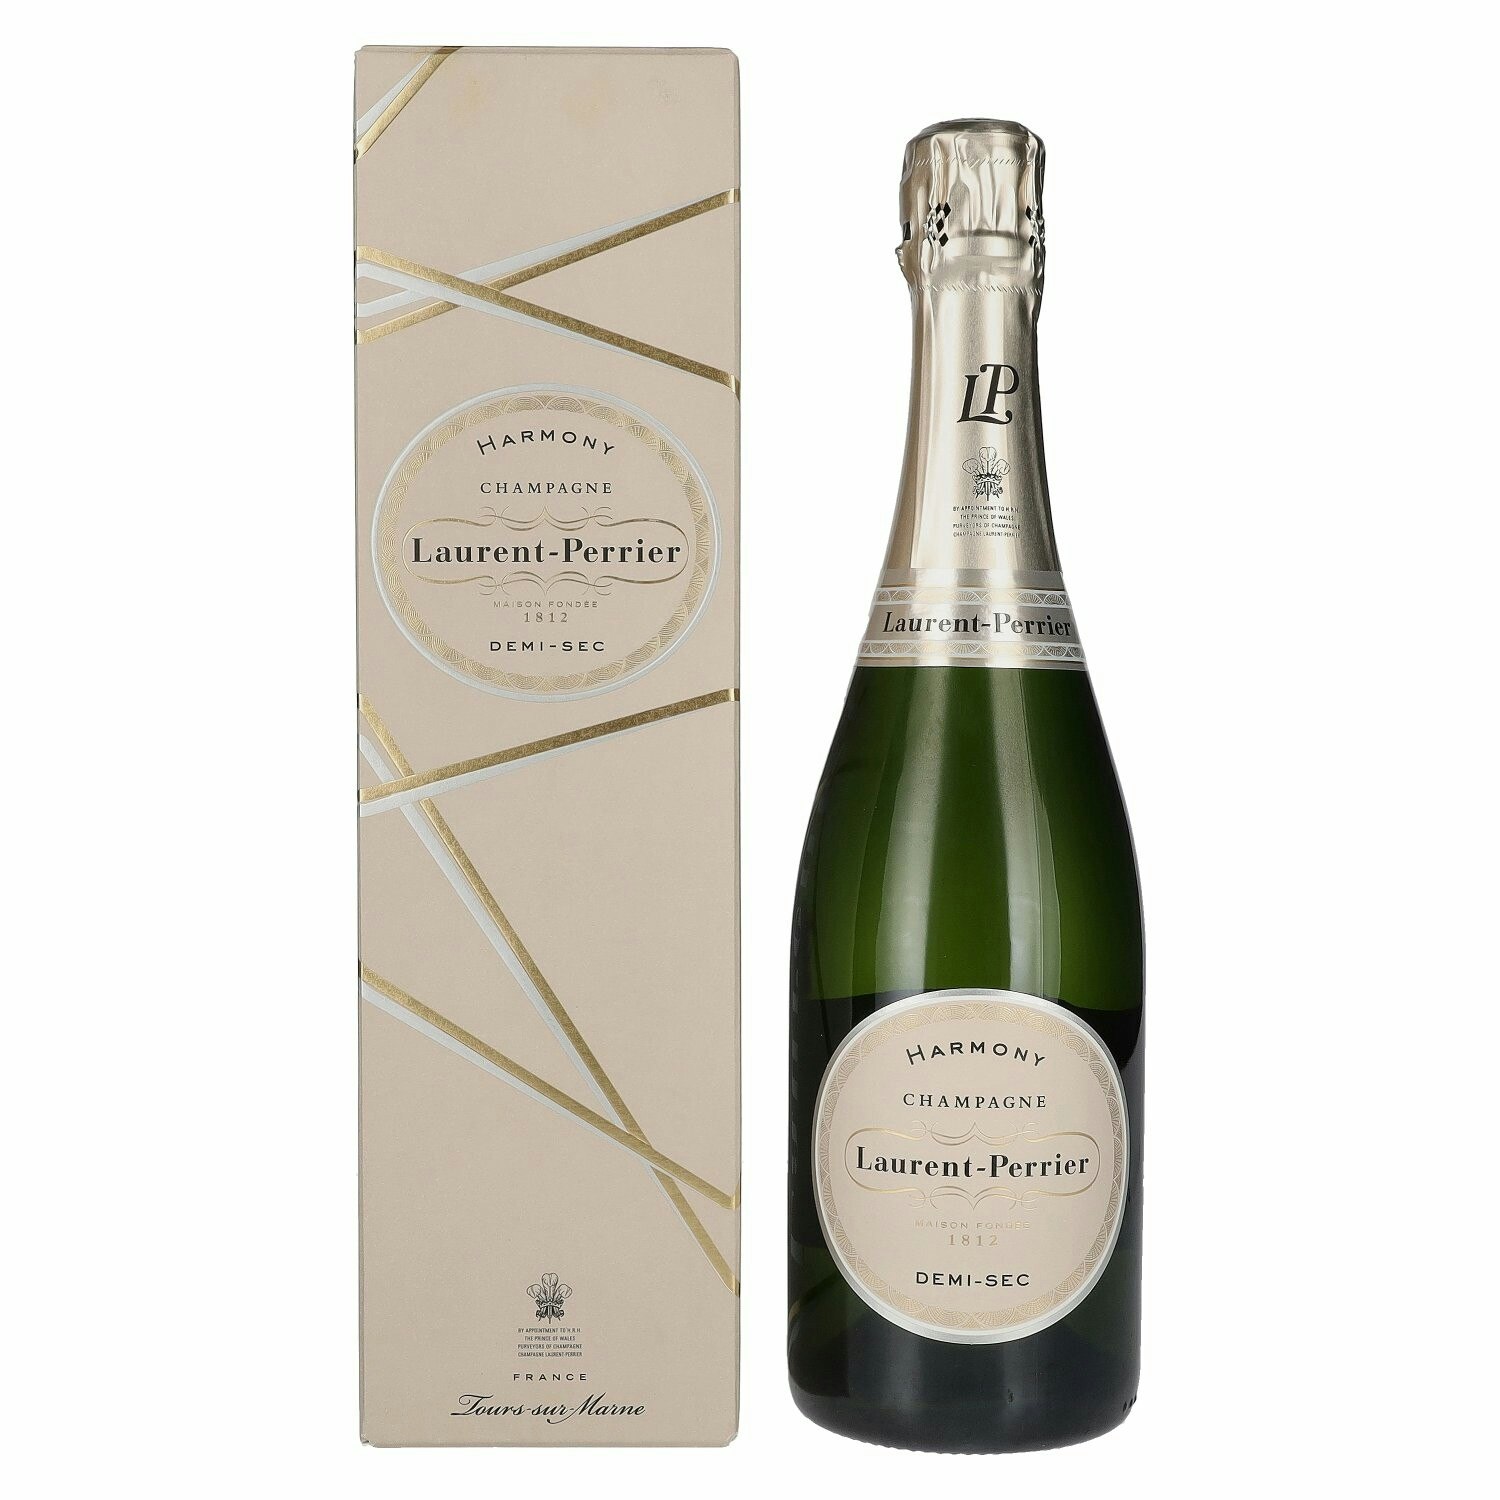 Laurent Perrier Champagne HARMONY Demi-Sec GB 12% Vol. 0,75l in Giftbox